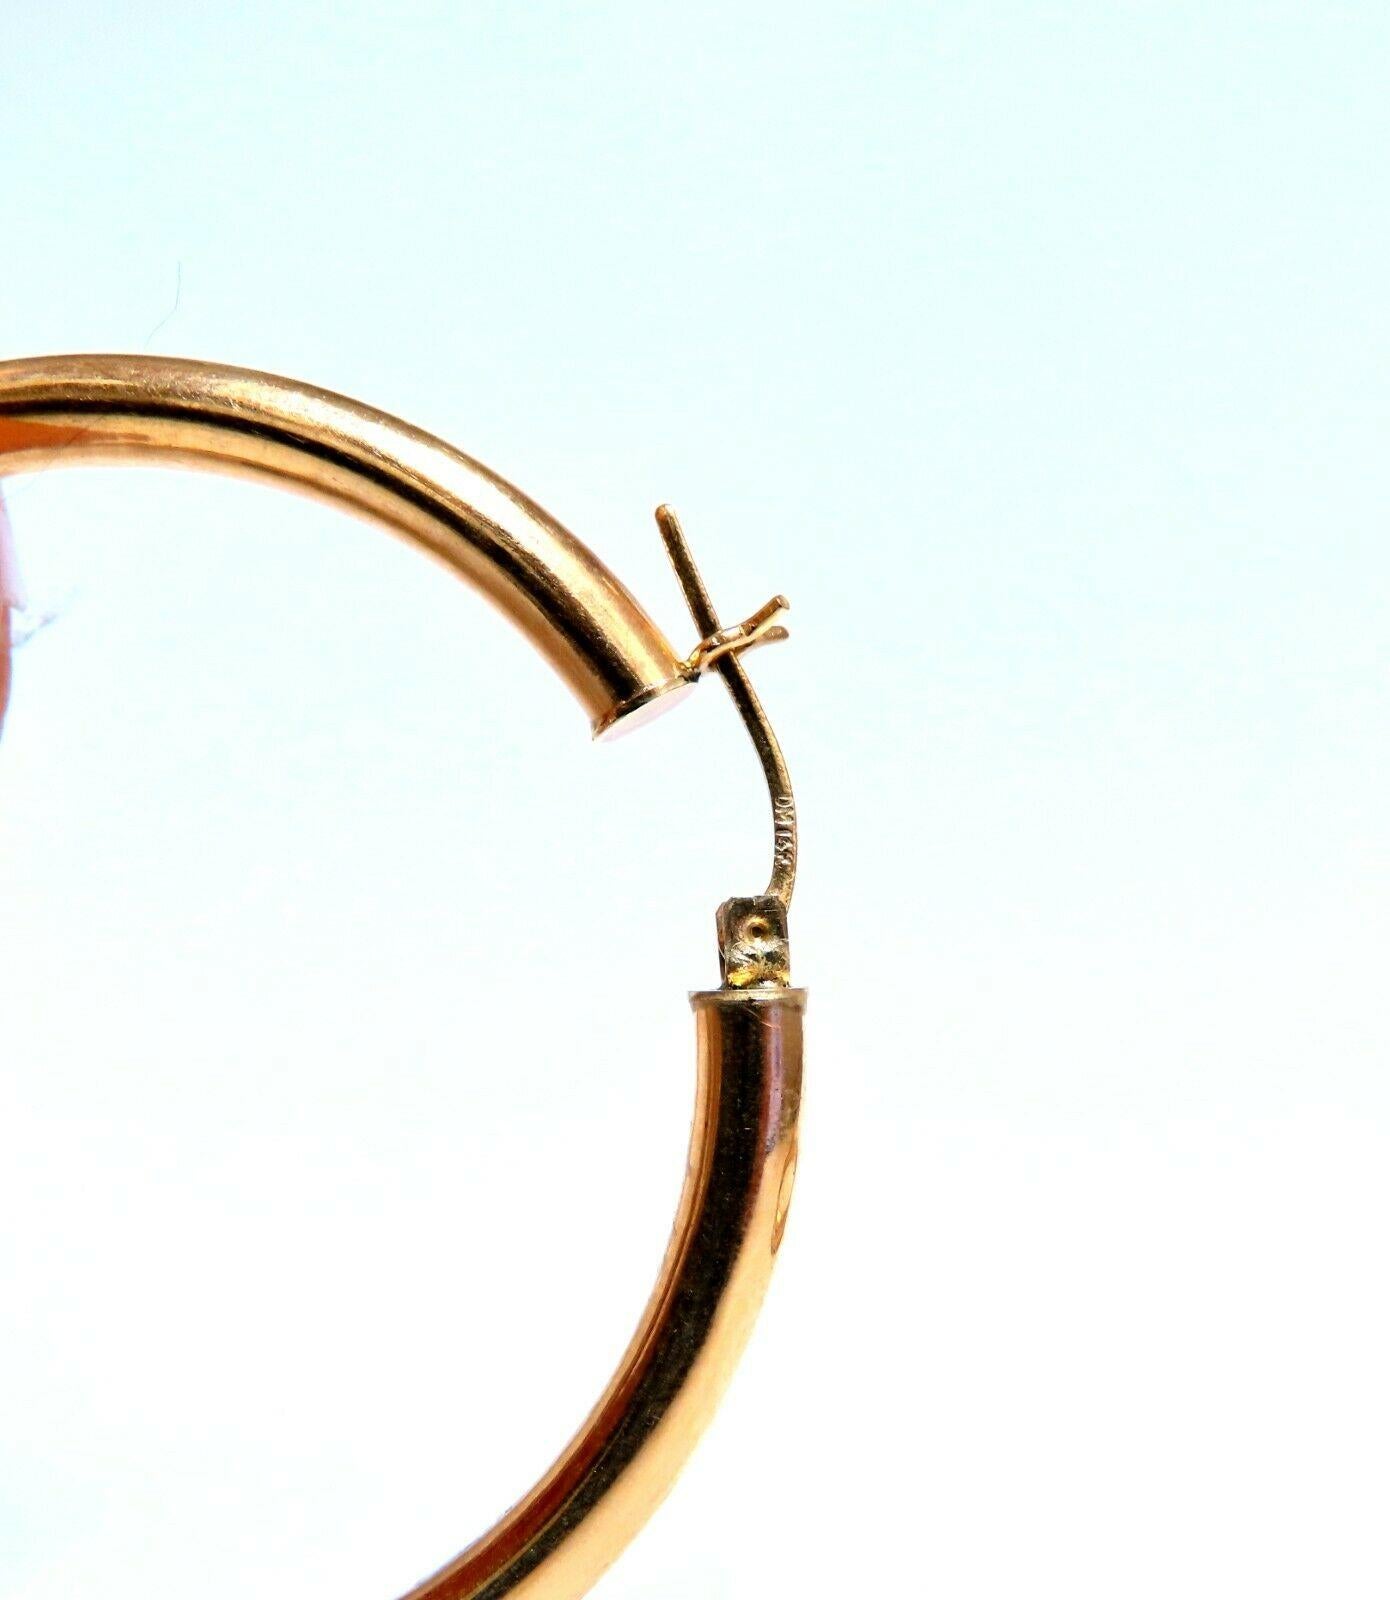 Gold Hoop Earrings

Measurements of Earrings:

47mm diameter / 1.85 inch

4mm wide.

5.8 grams / 14kt. yellow gold

Earrings are gorgeous made